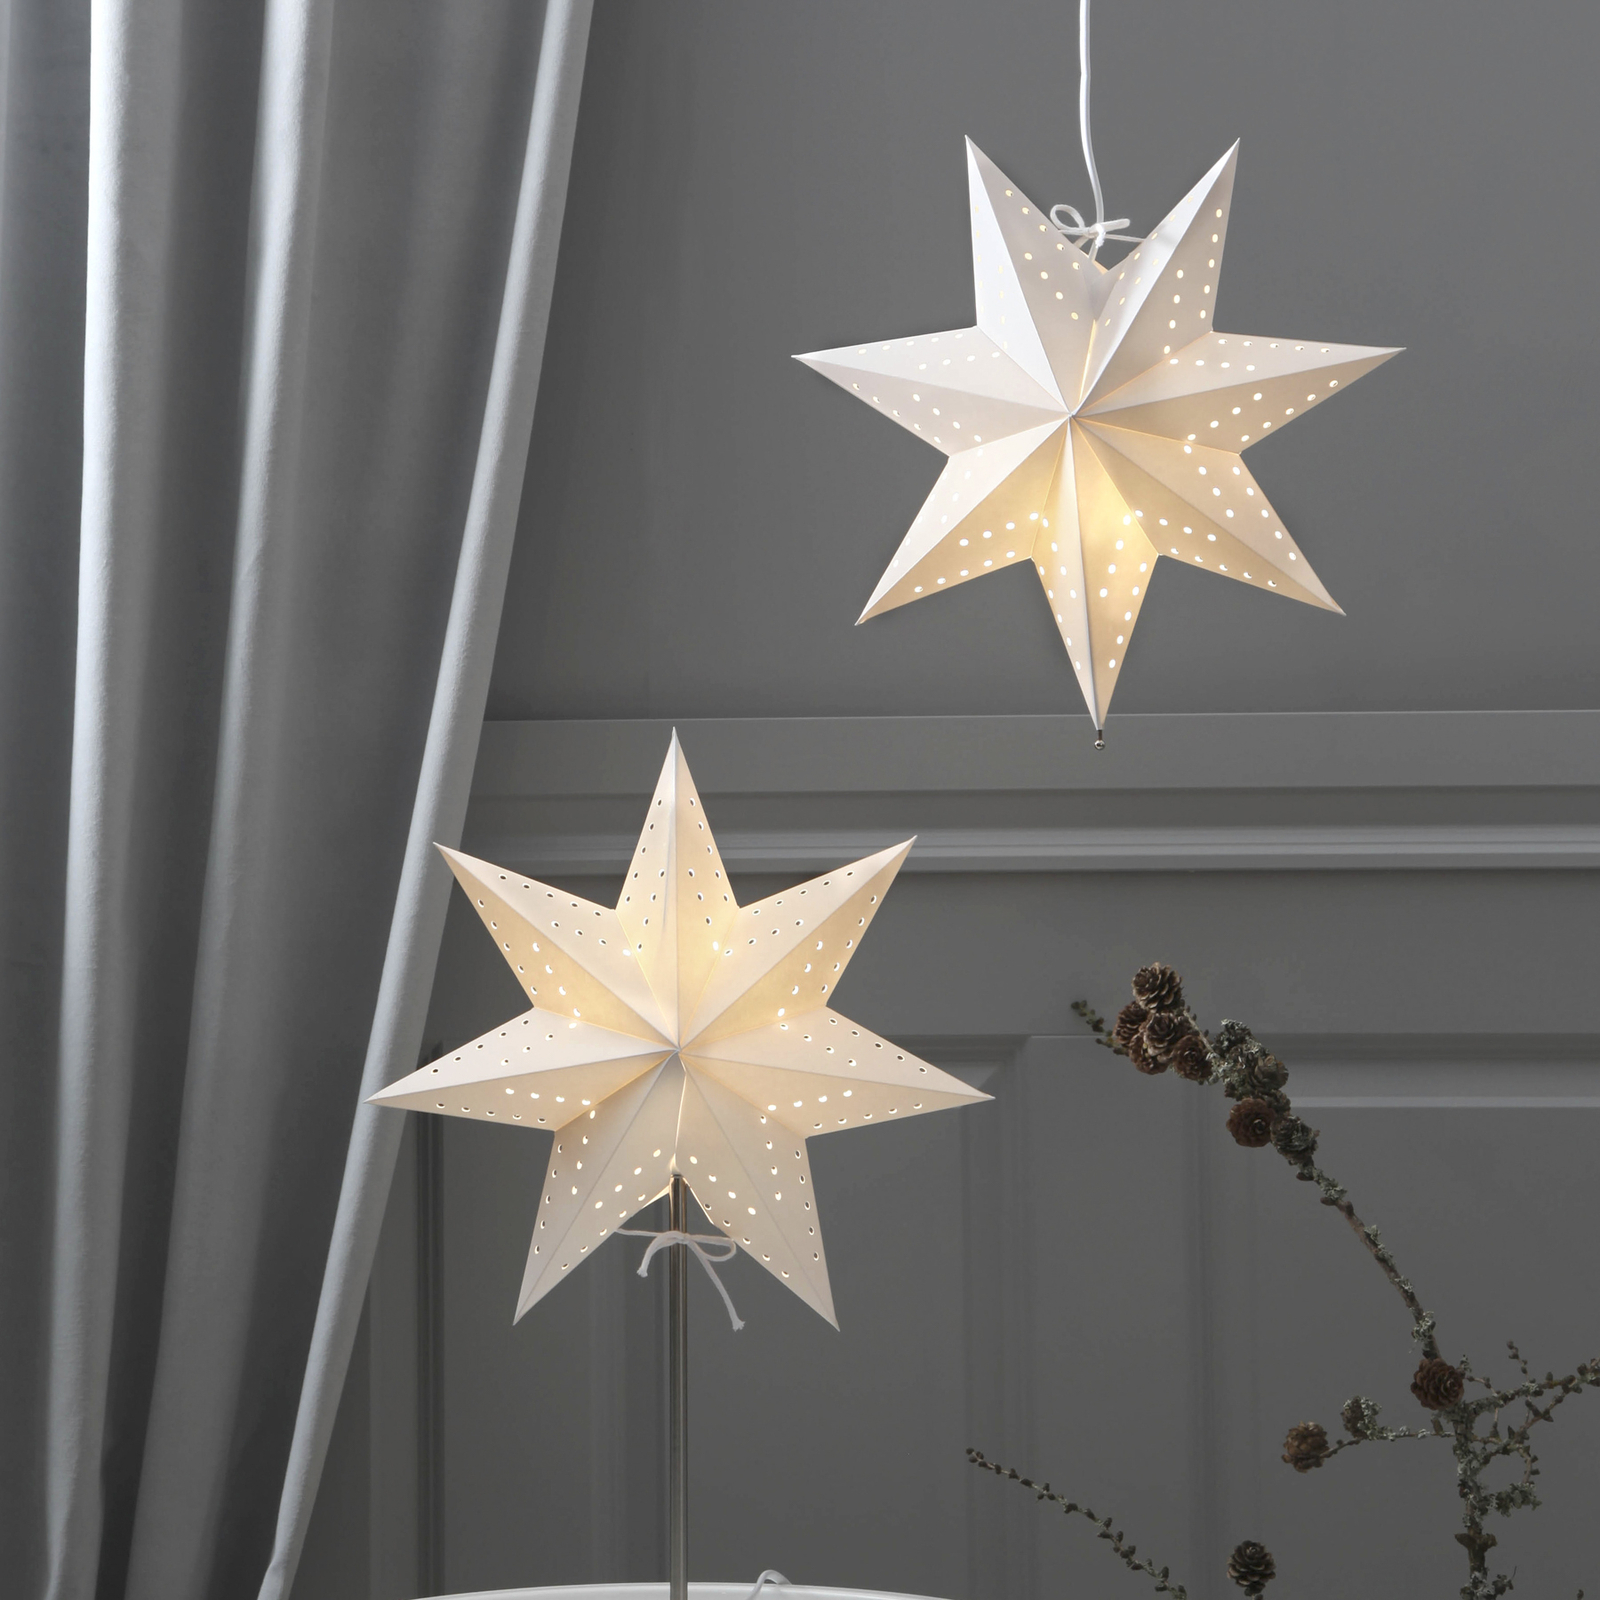 Bobo paper star, 7-pointed, white, Ø 34 cm